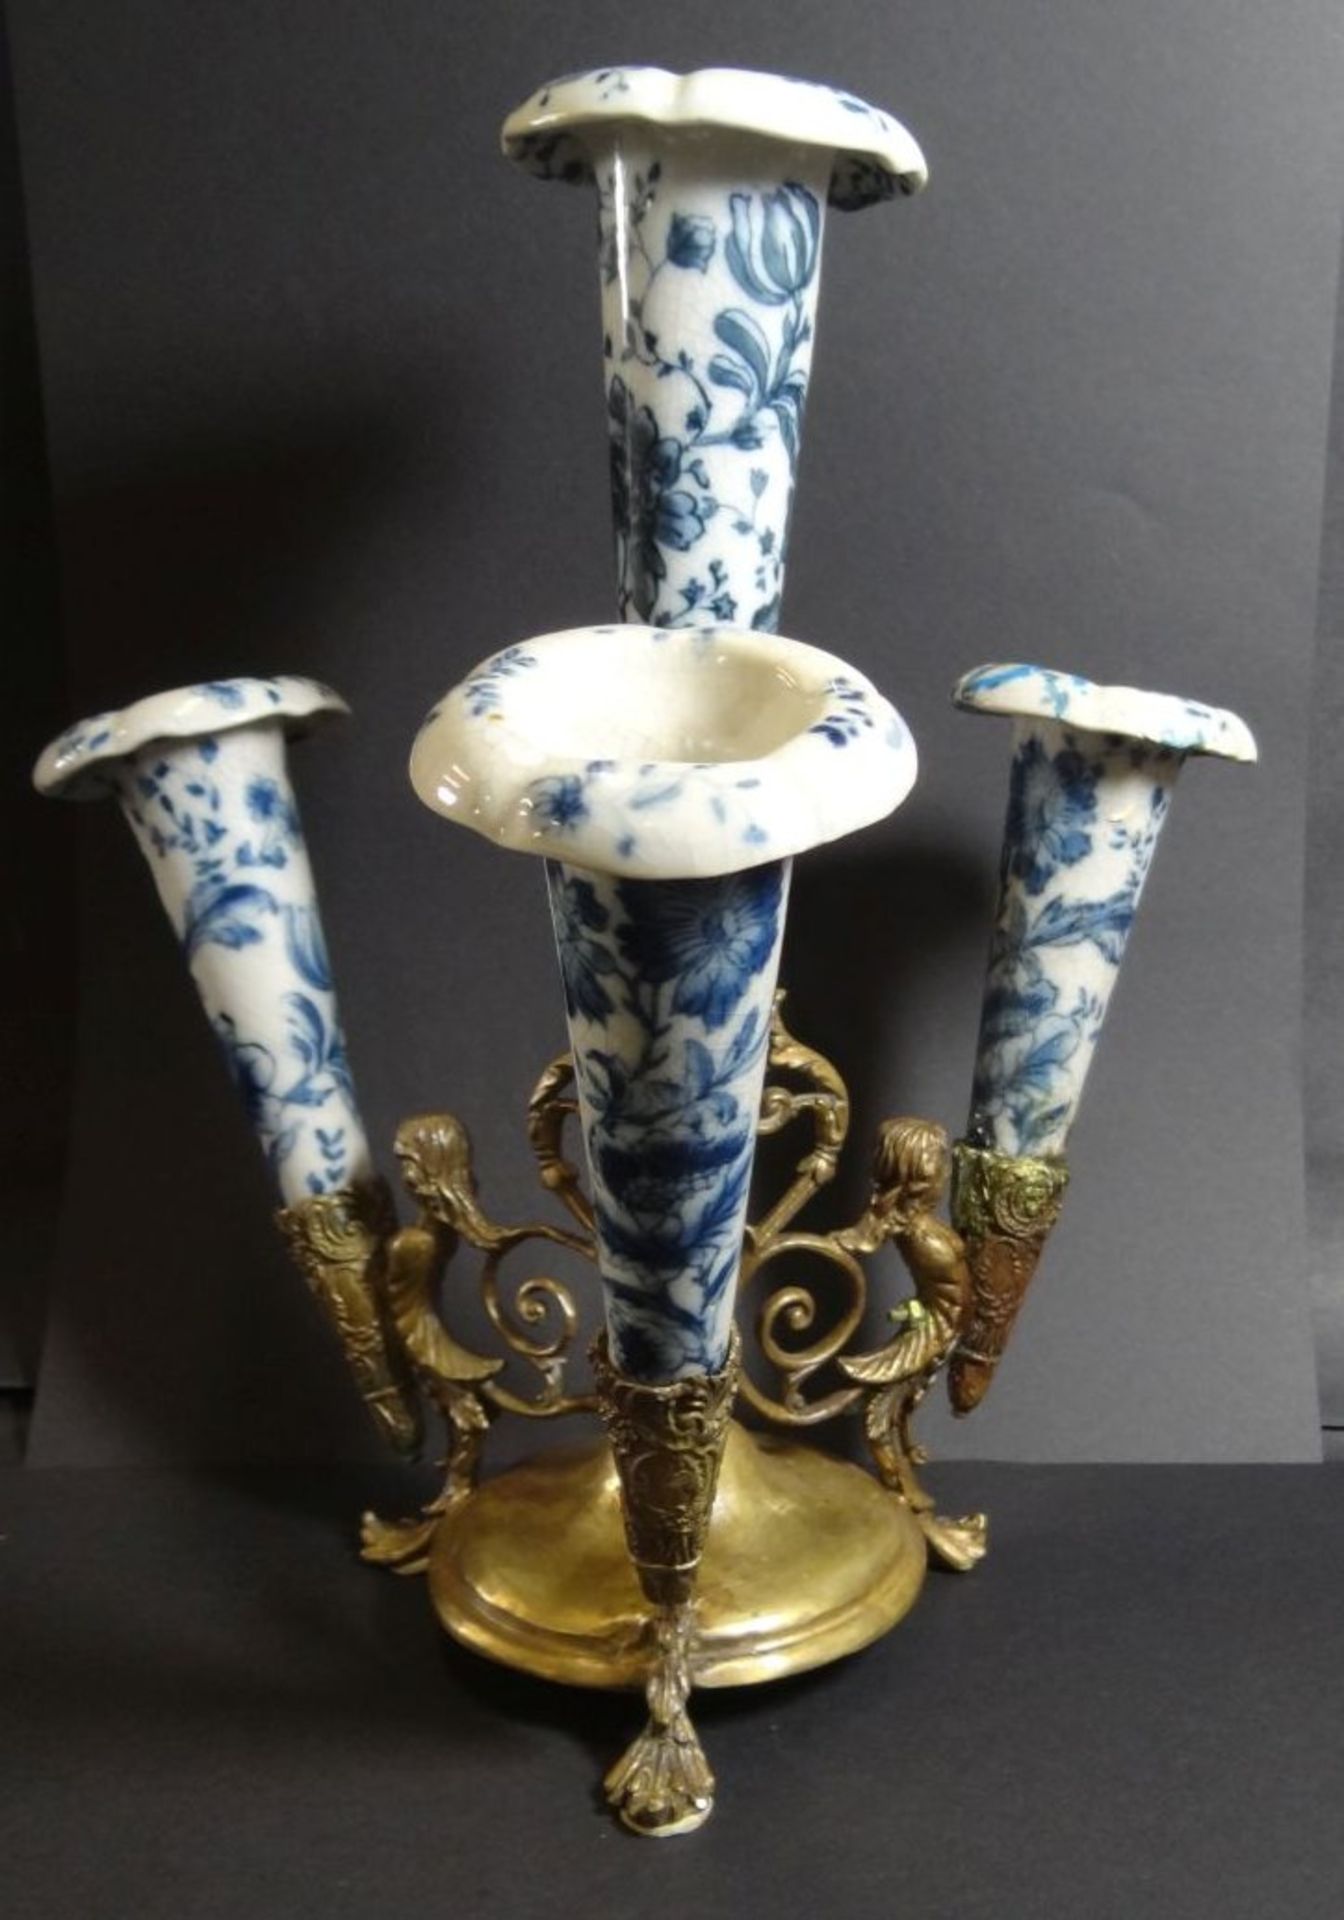 Tischvasen bzw. Kerzenhalter, Keramik in Messinghalter um 1880 mit Meerjungfrauen, Blaumalerei, H-